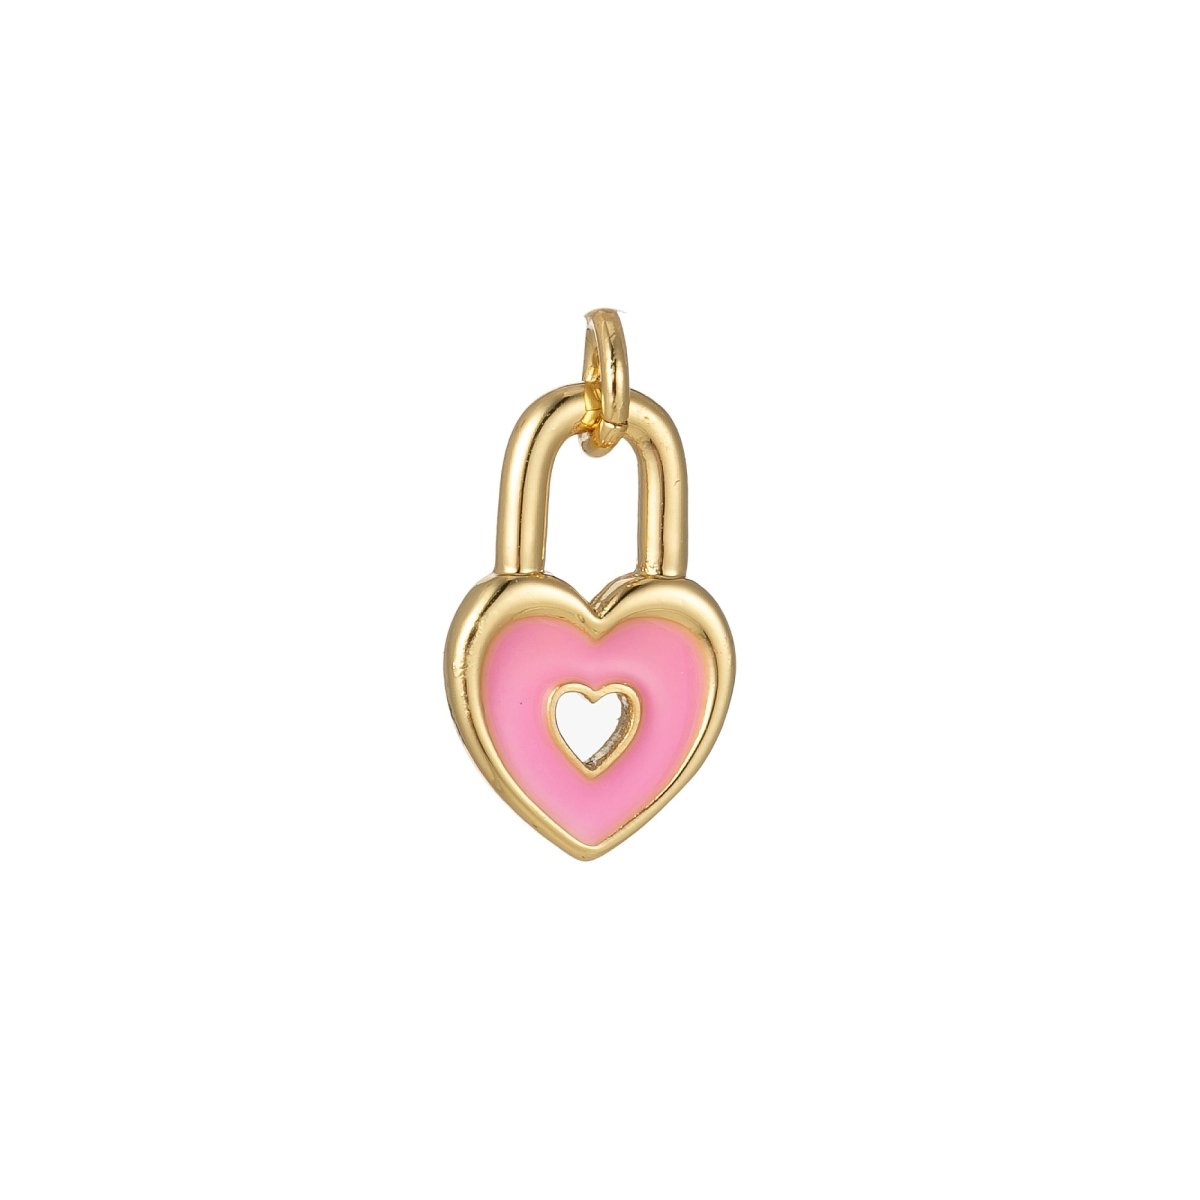 14k Gold Filled Dainty Heart Padlock Charm Colorful Enamel Lock Charm for Necklace Bracelet Jewelry Making Black Blue Pink Green Orange Purple E-794-E-803 - DLUXCA